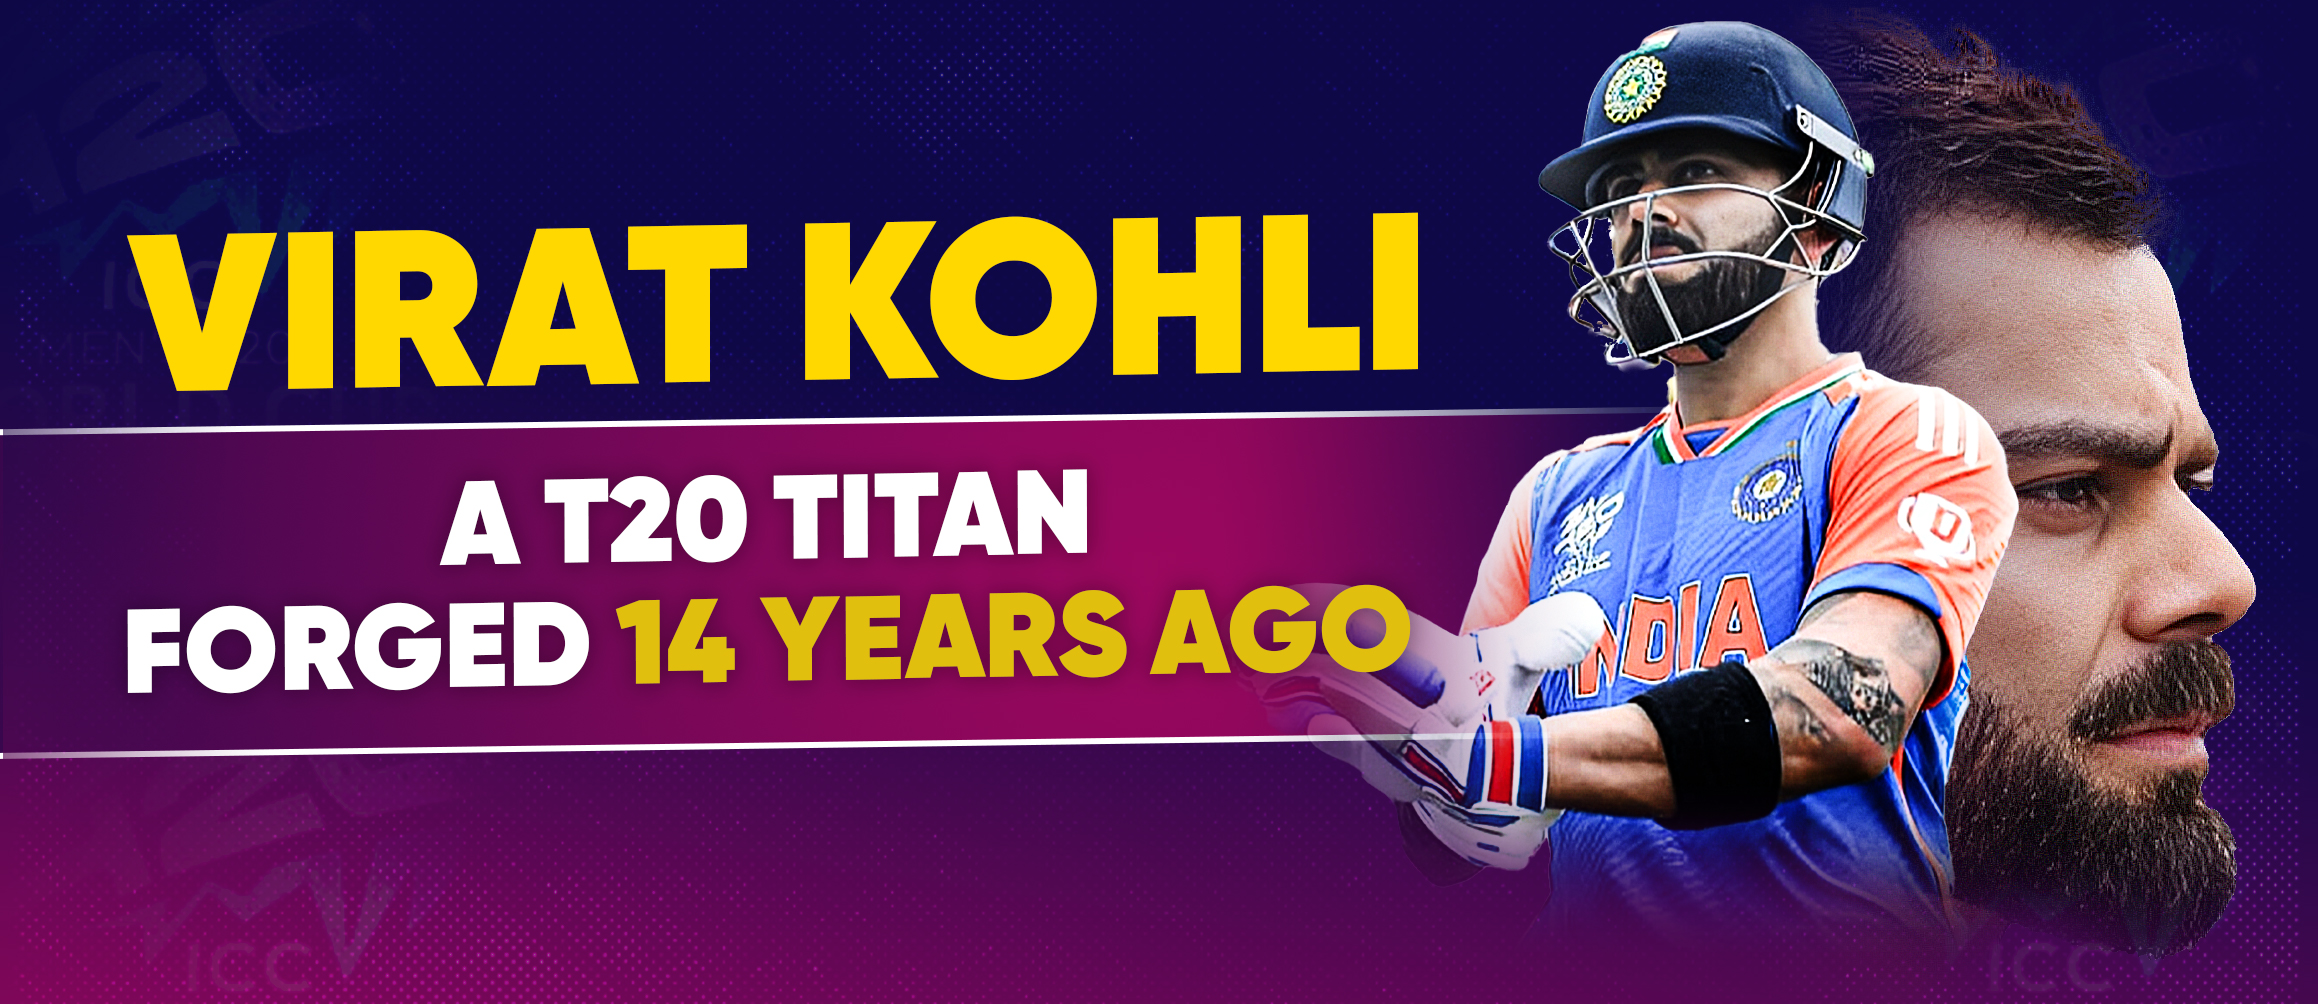 Virat Kohli: A T20 Titan Forged 14 Years Ago